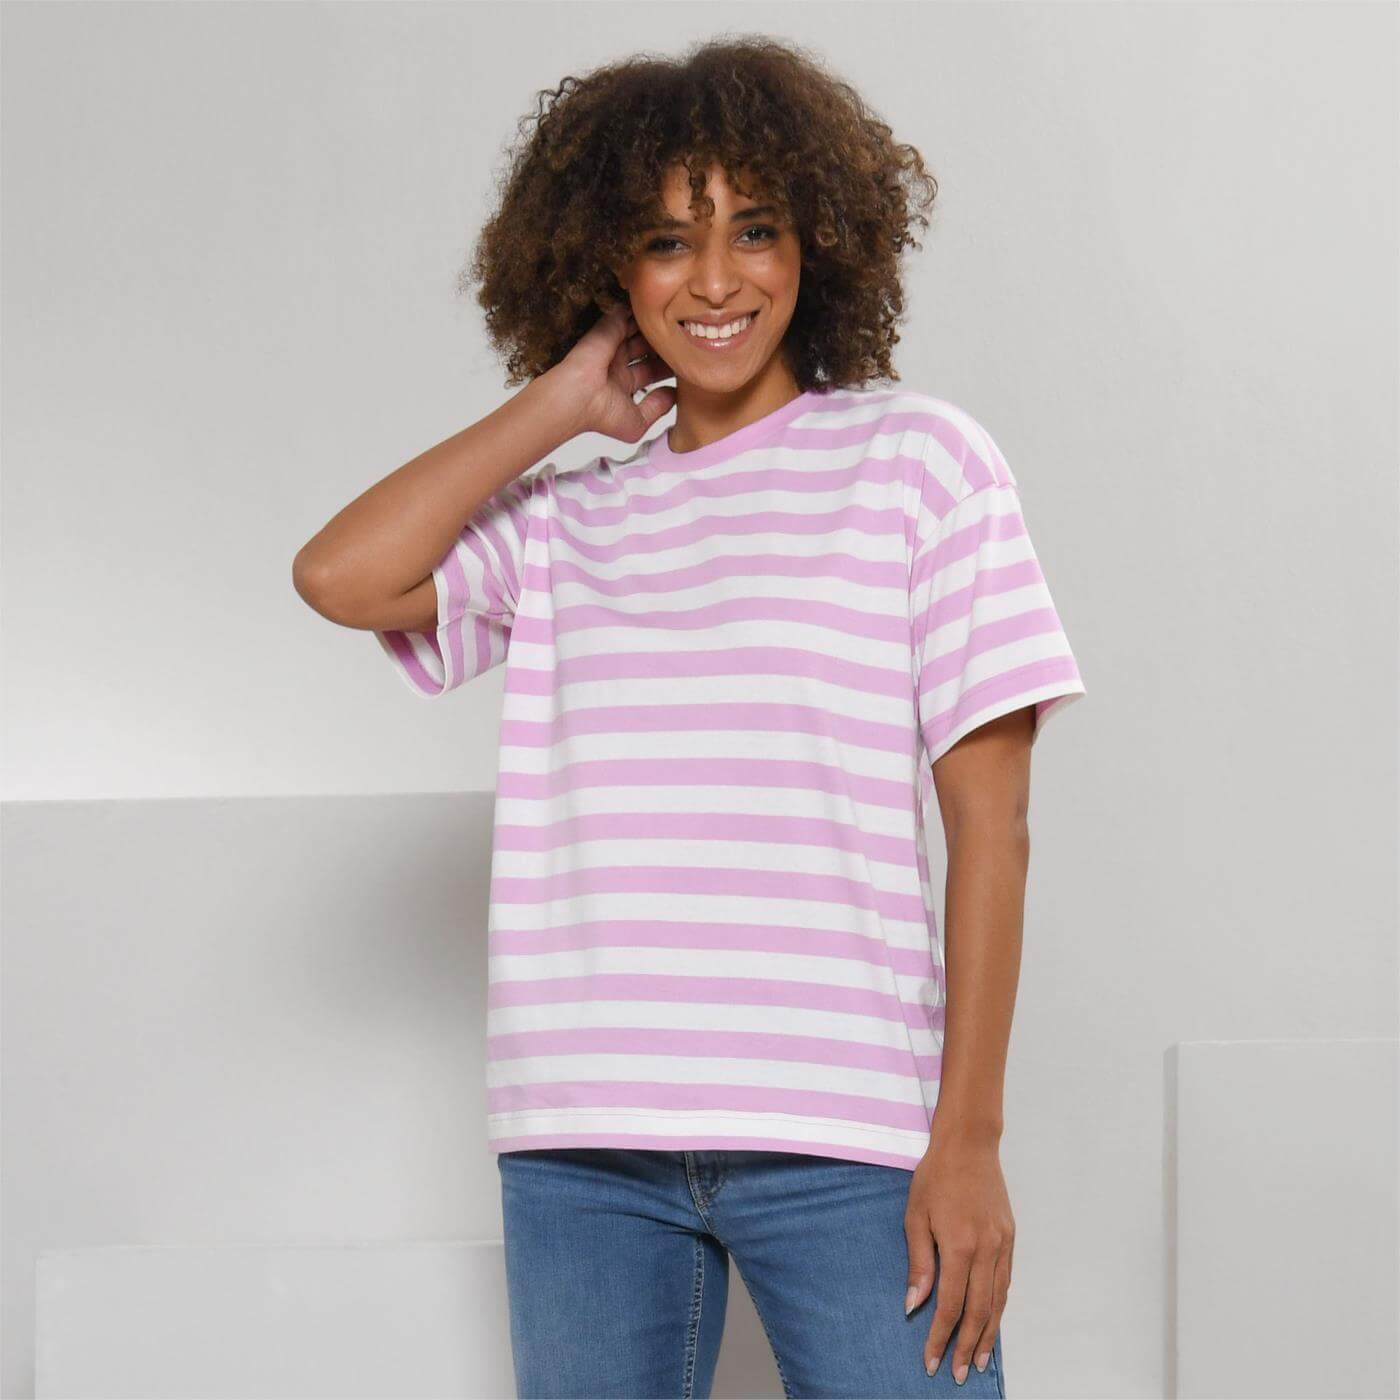 Gestreiftes T-Shirt MARIA pastel lavender/offwhite